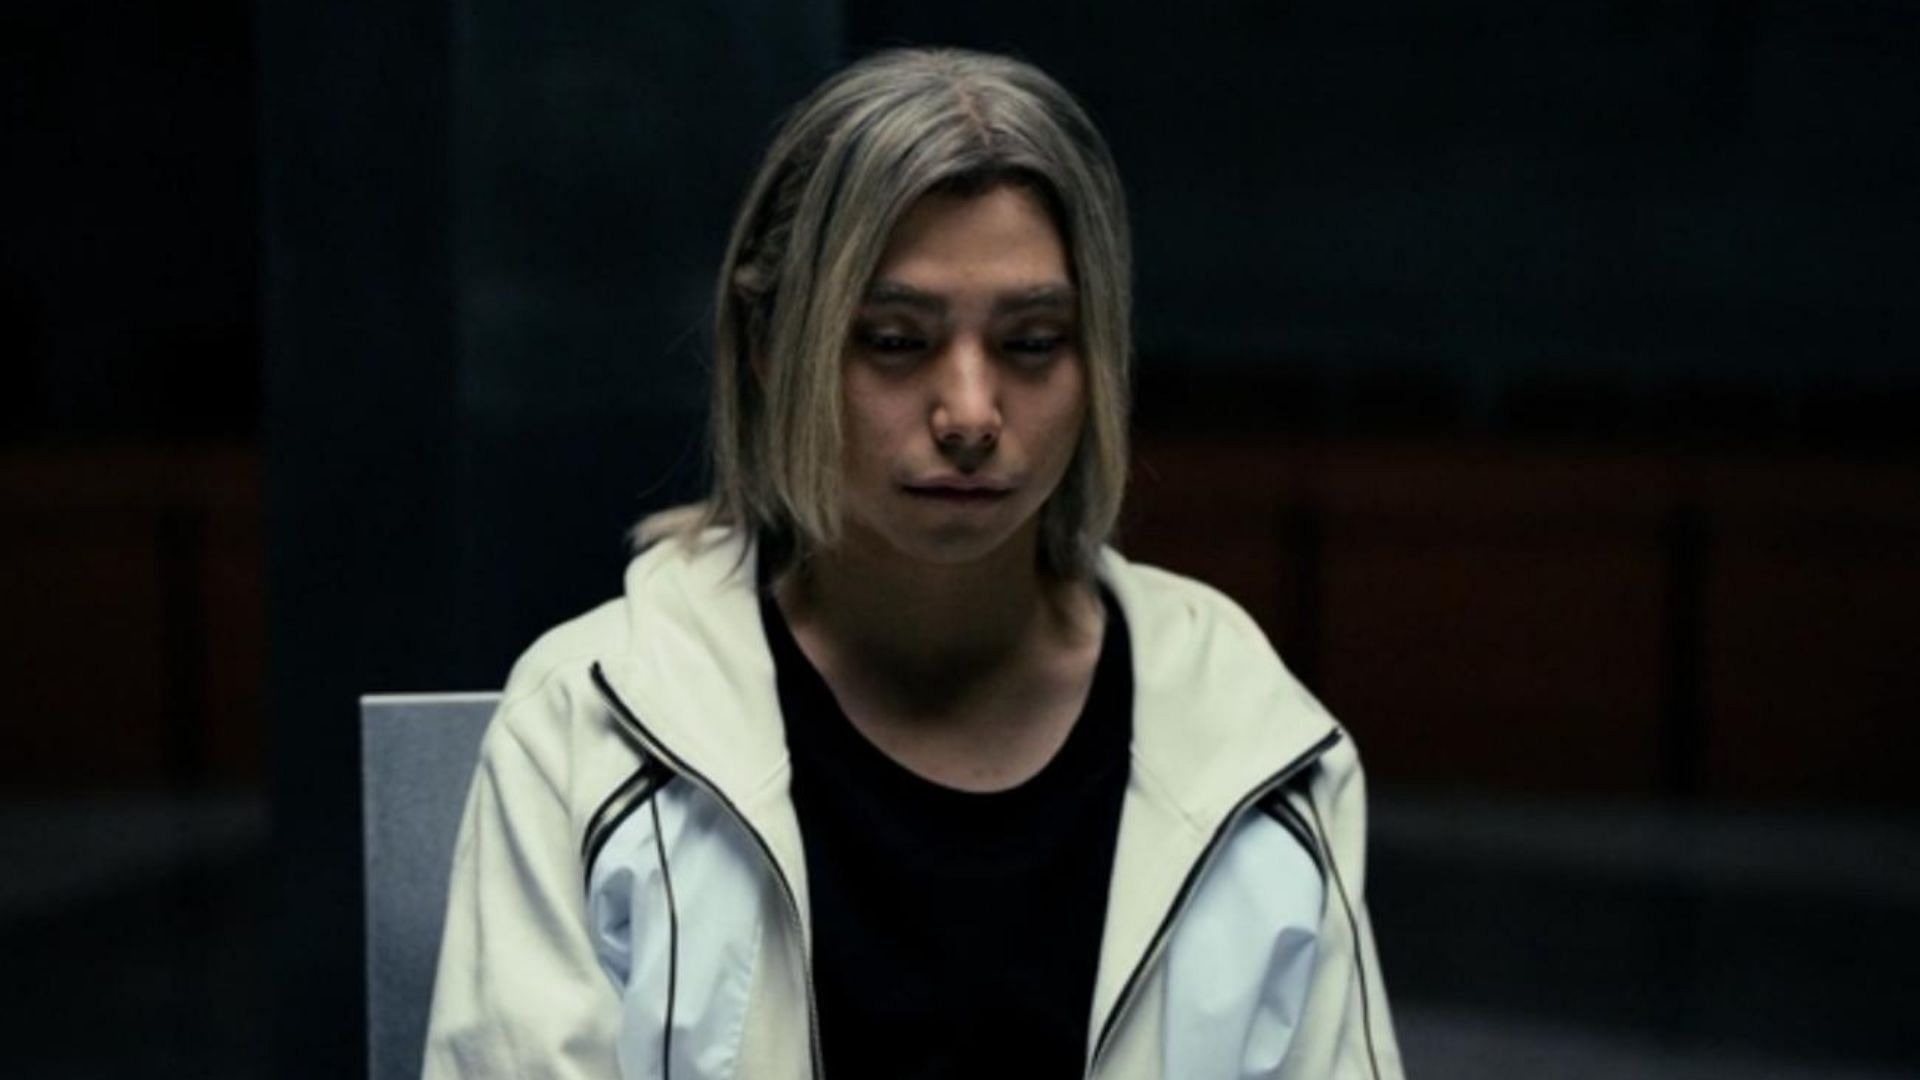 Chishiya as seen in Alice in Borderland season 2 (Image via Netflix)